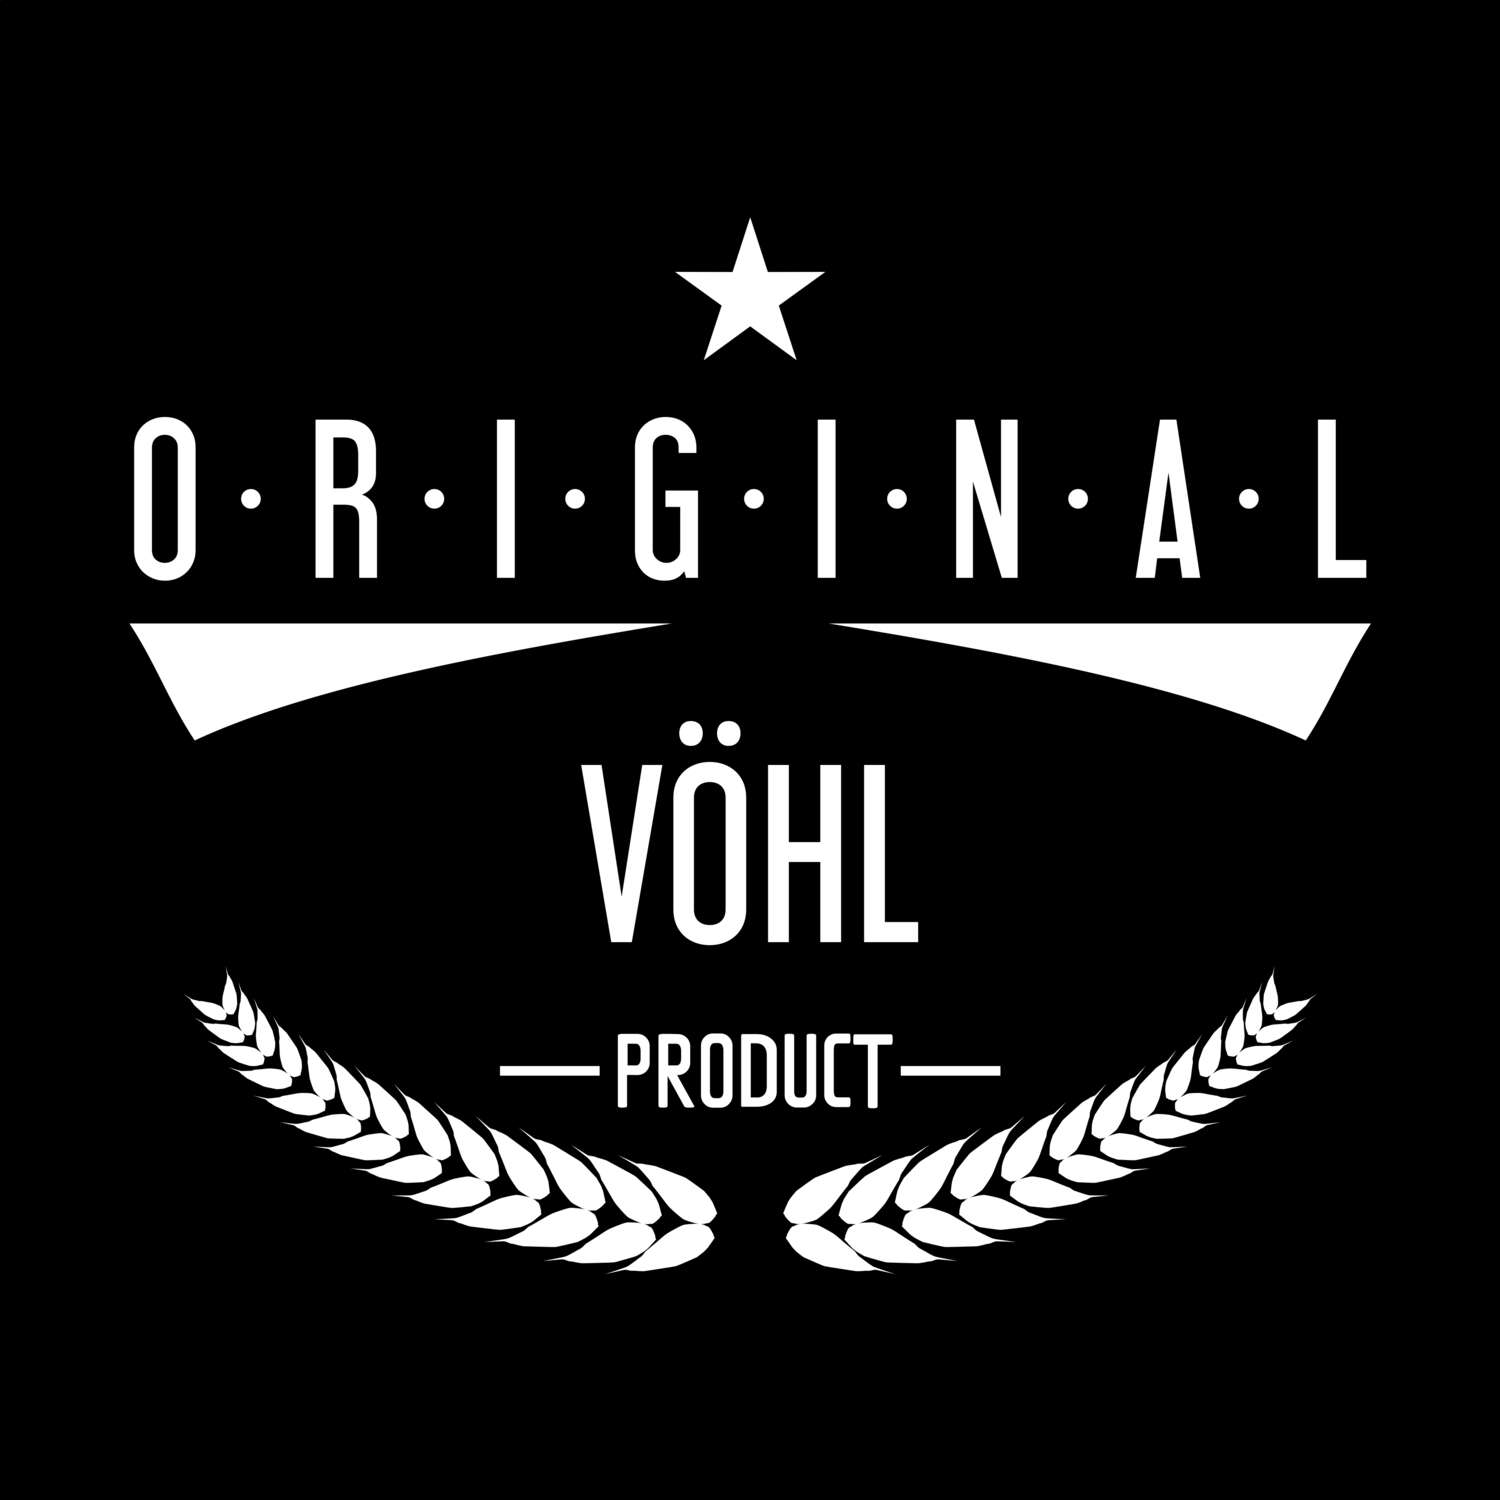 Vöhl T-Shirt »Original Product«